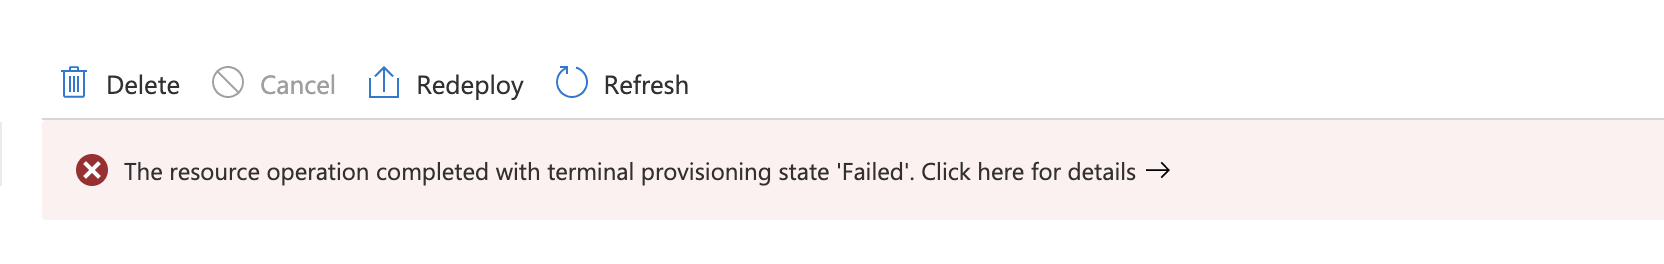 Provisioning failure error pop up in Azure